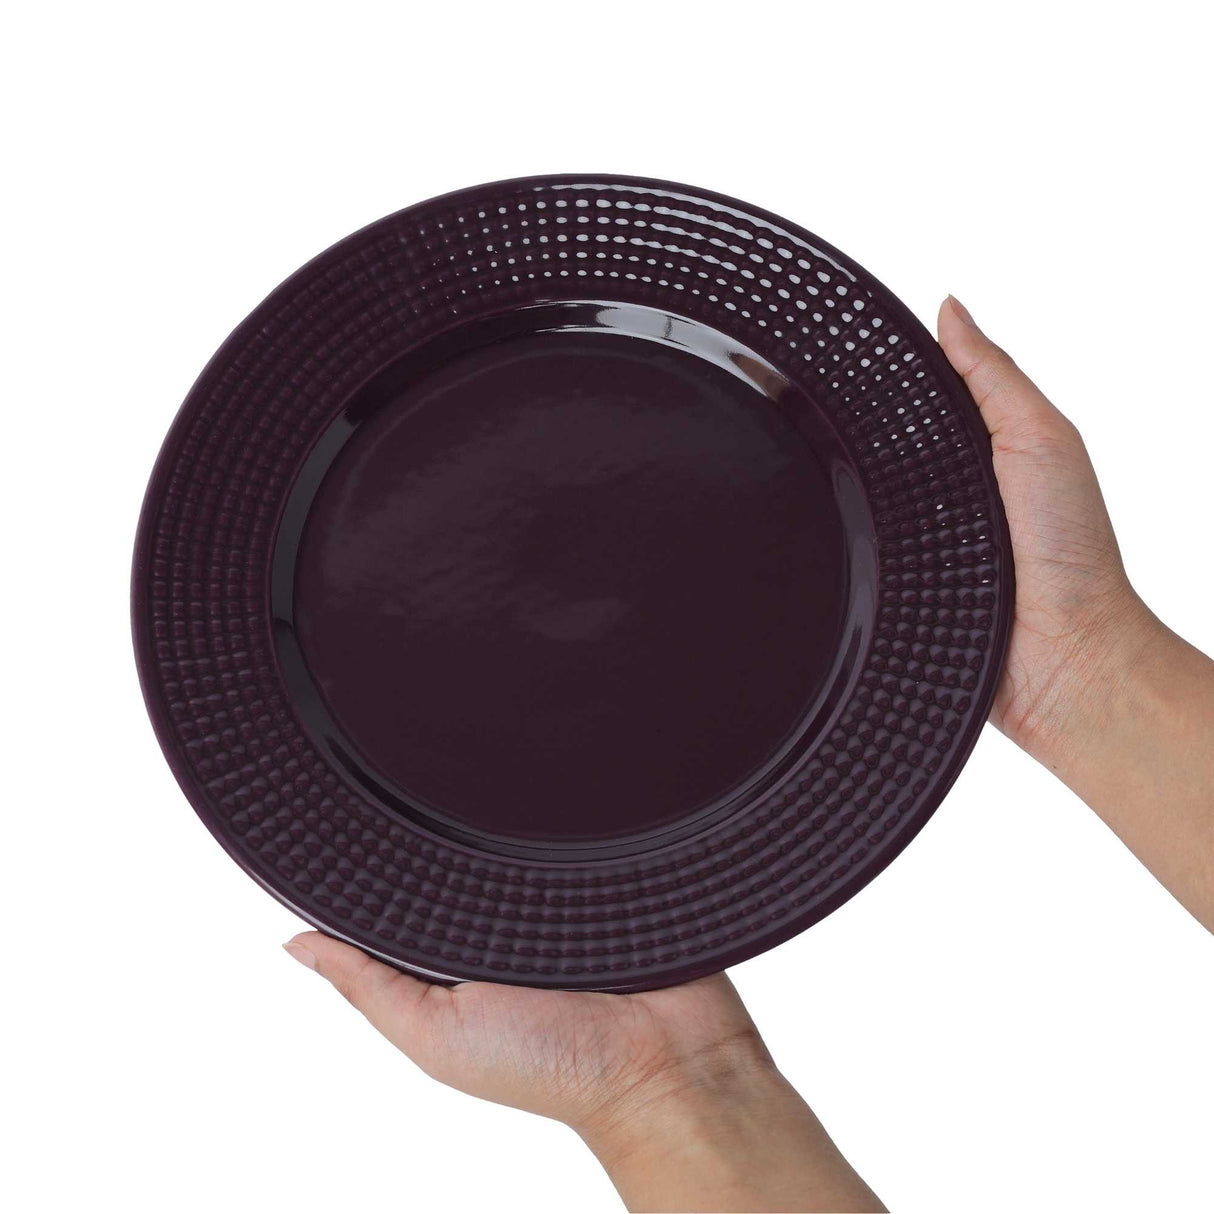 Single ceramic plate